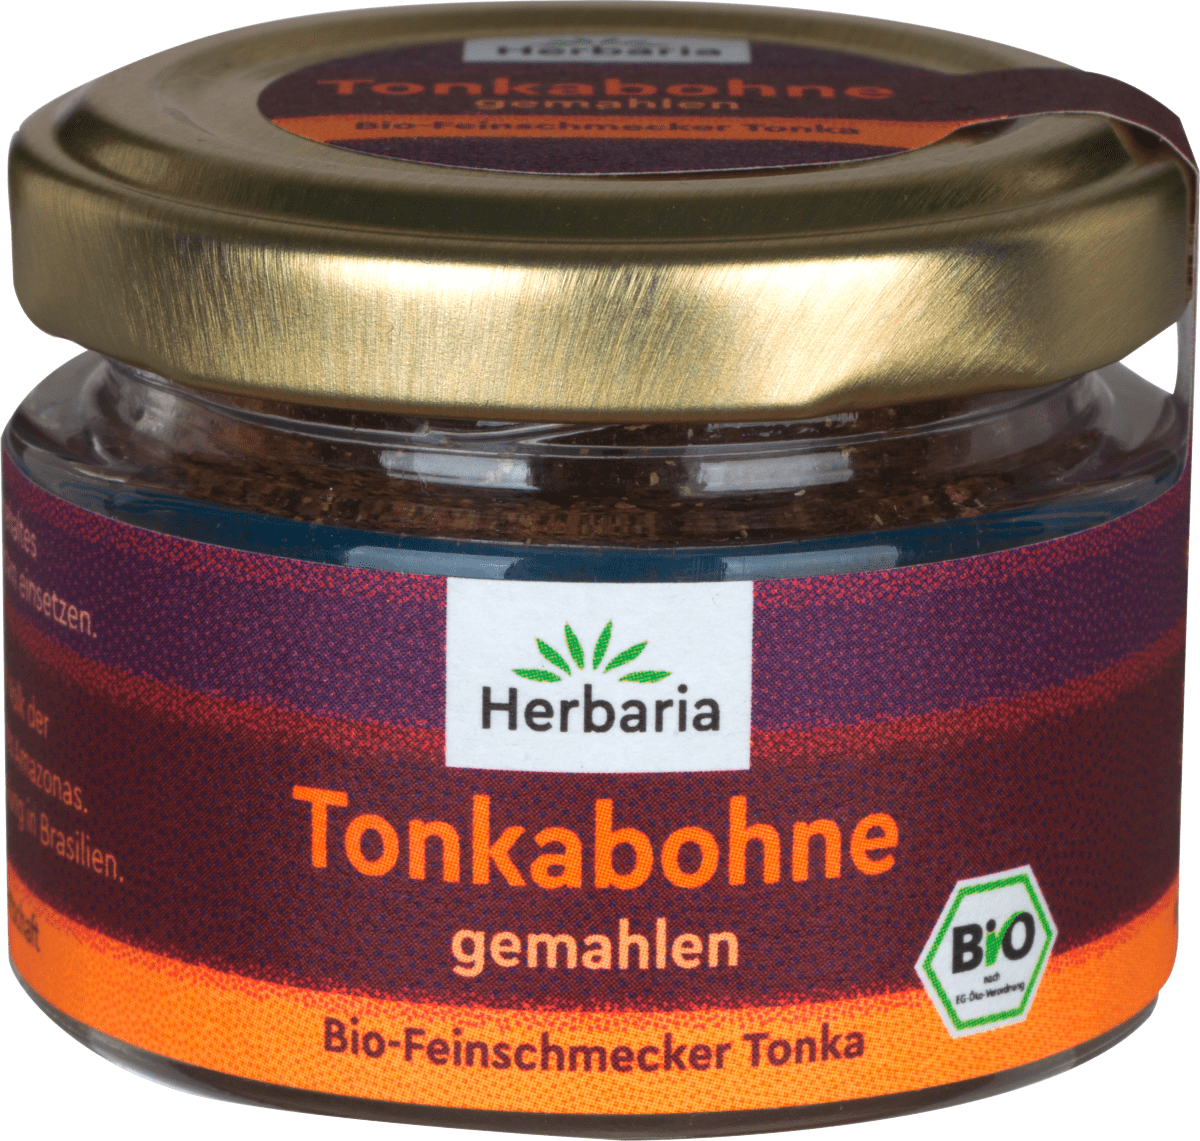 Tonkabohne gemahlen  Herbaria Kräuterparadies GmbH